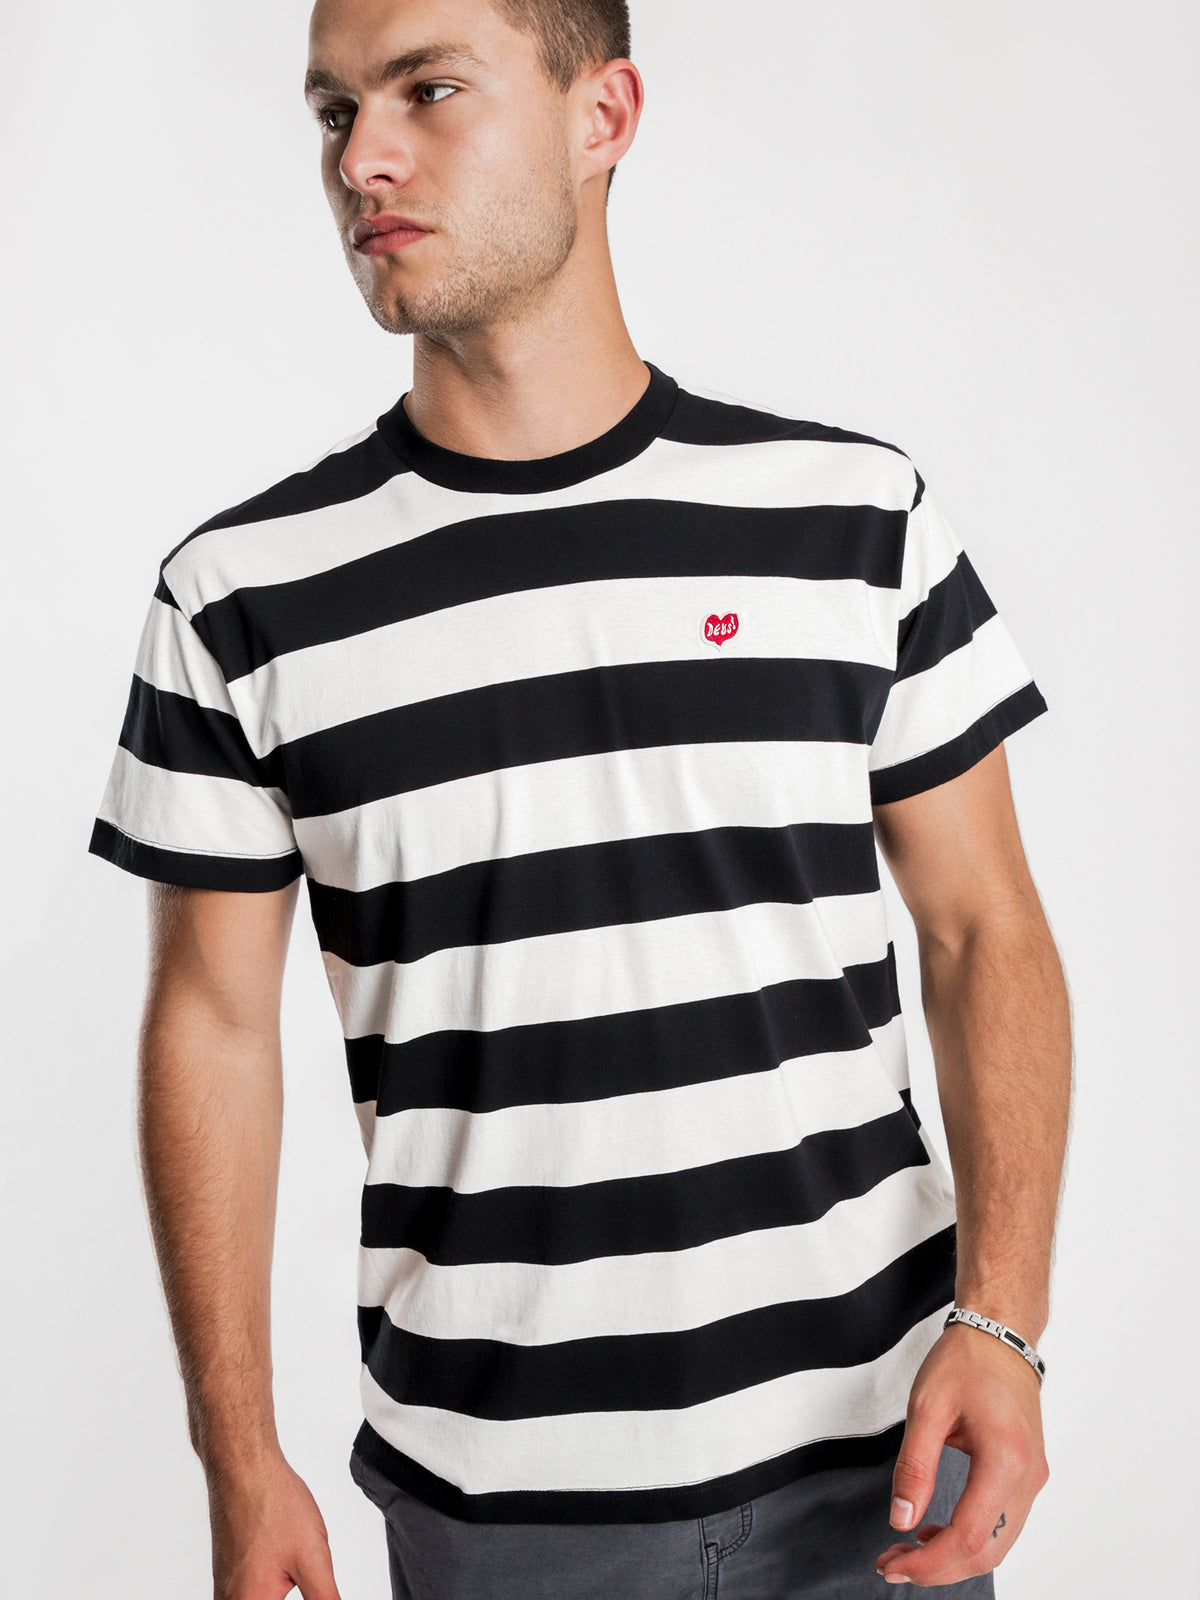 Amore Stripe Short Sleeve T-Shirt in Black